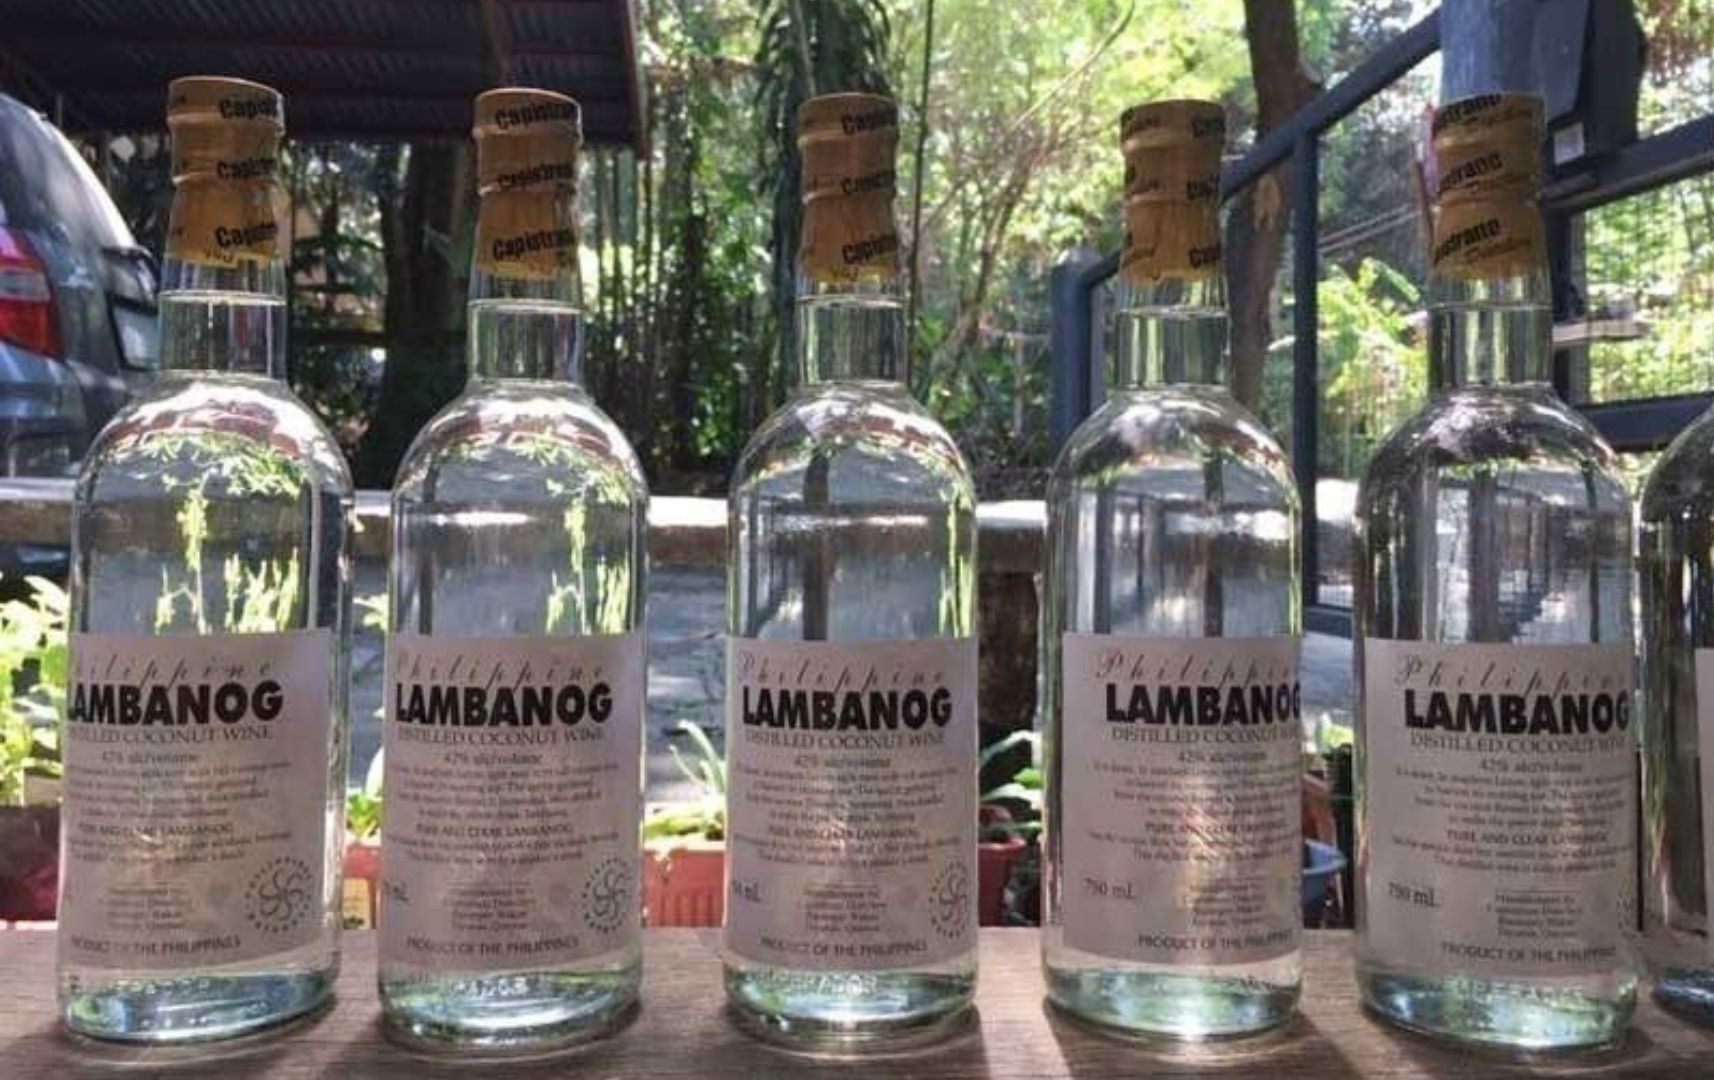 Shot puno! Lambanog second on ‘top global spirits’ list